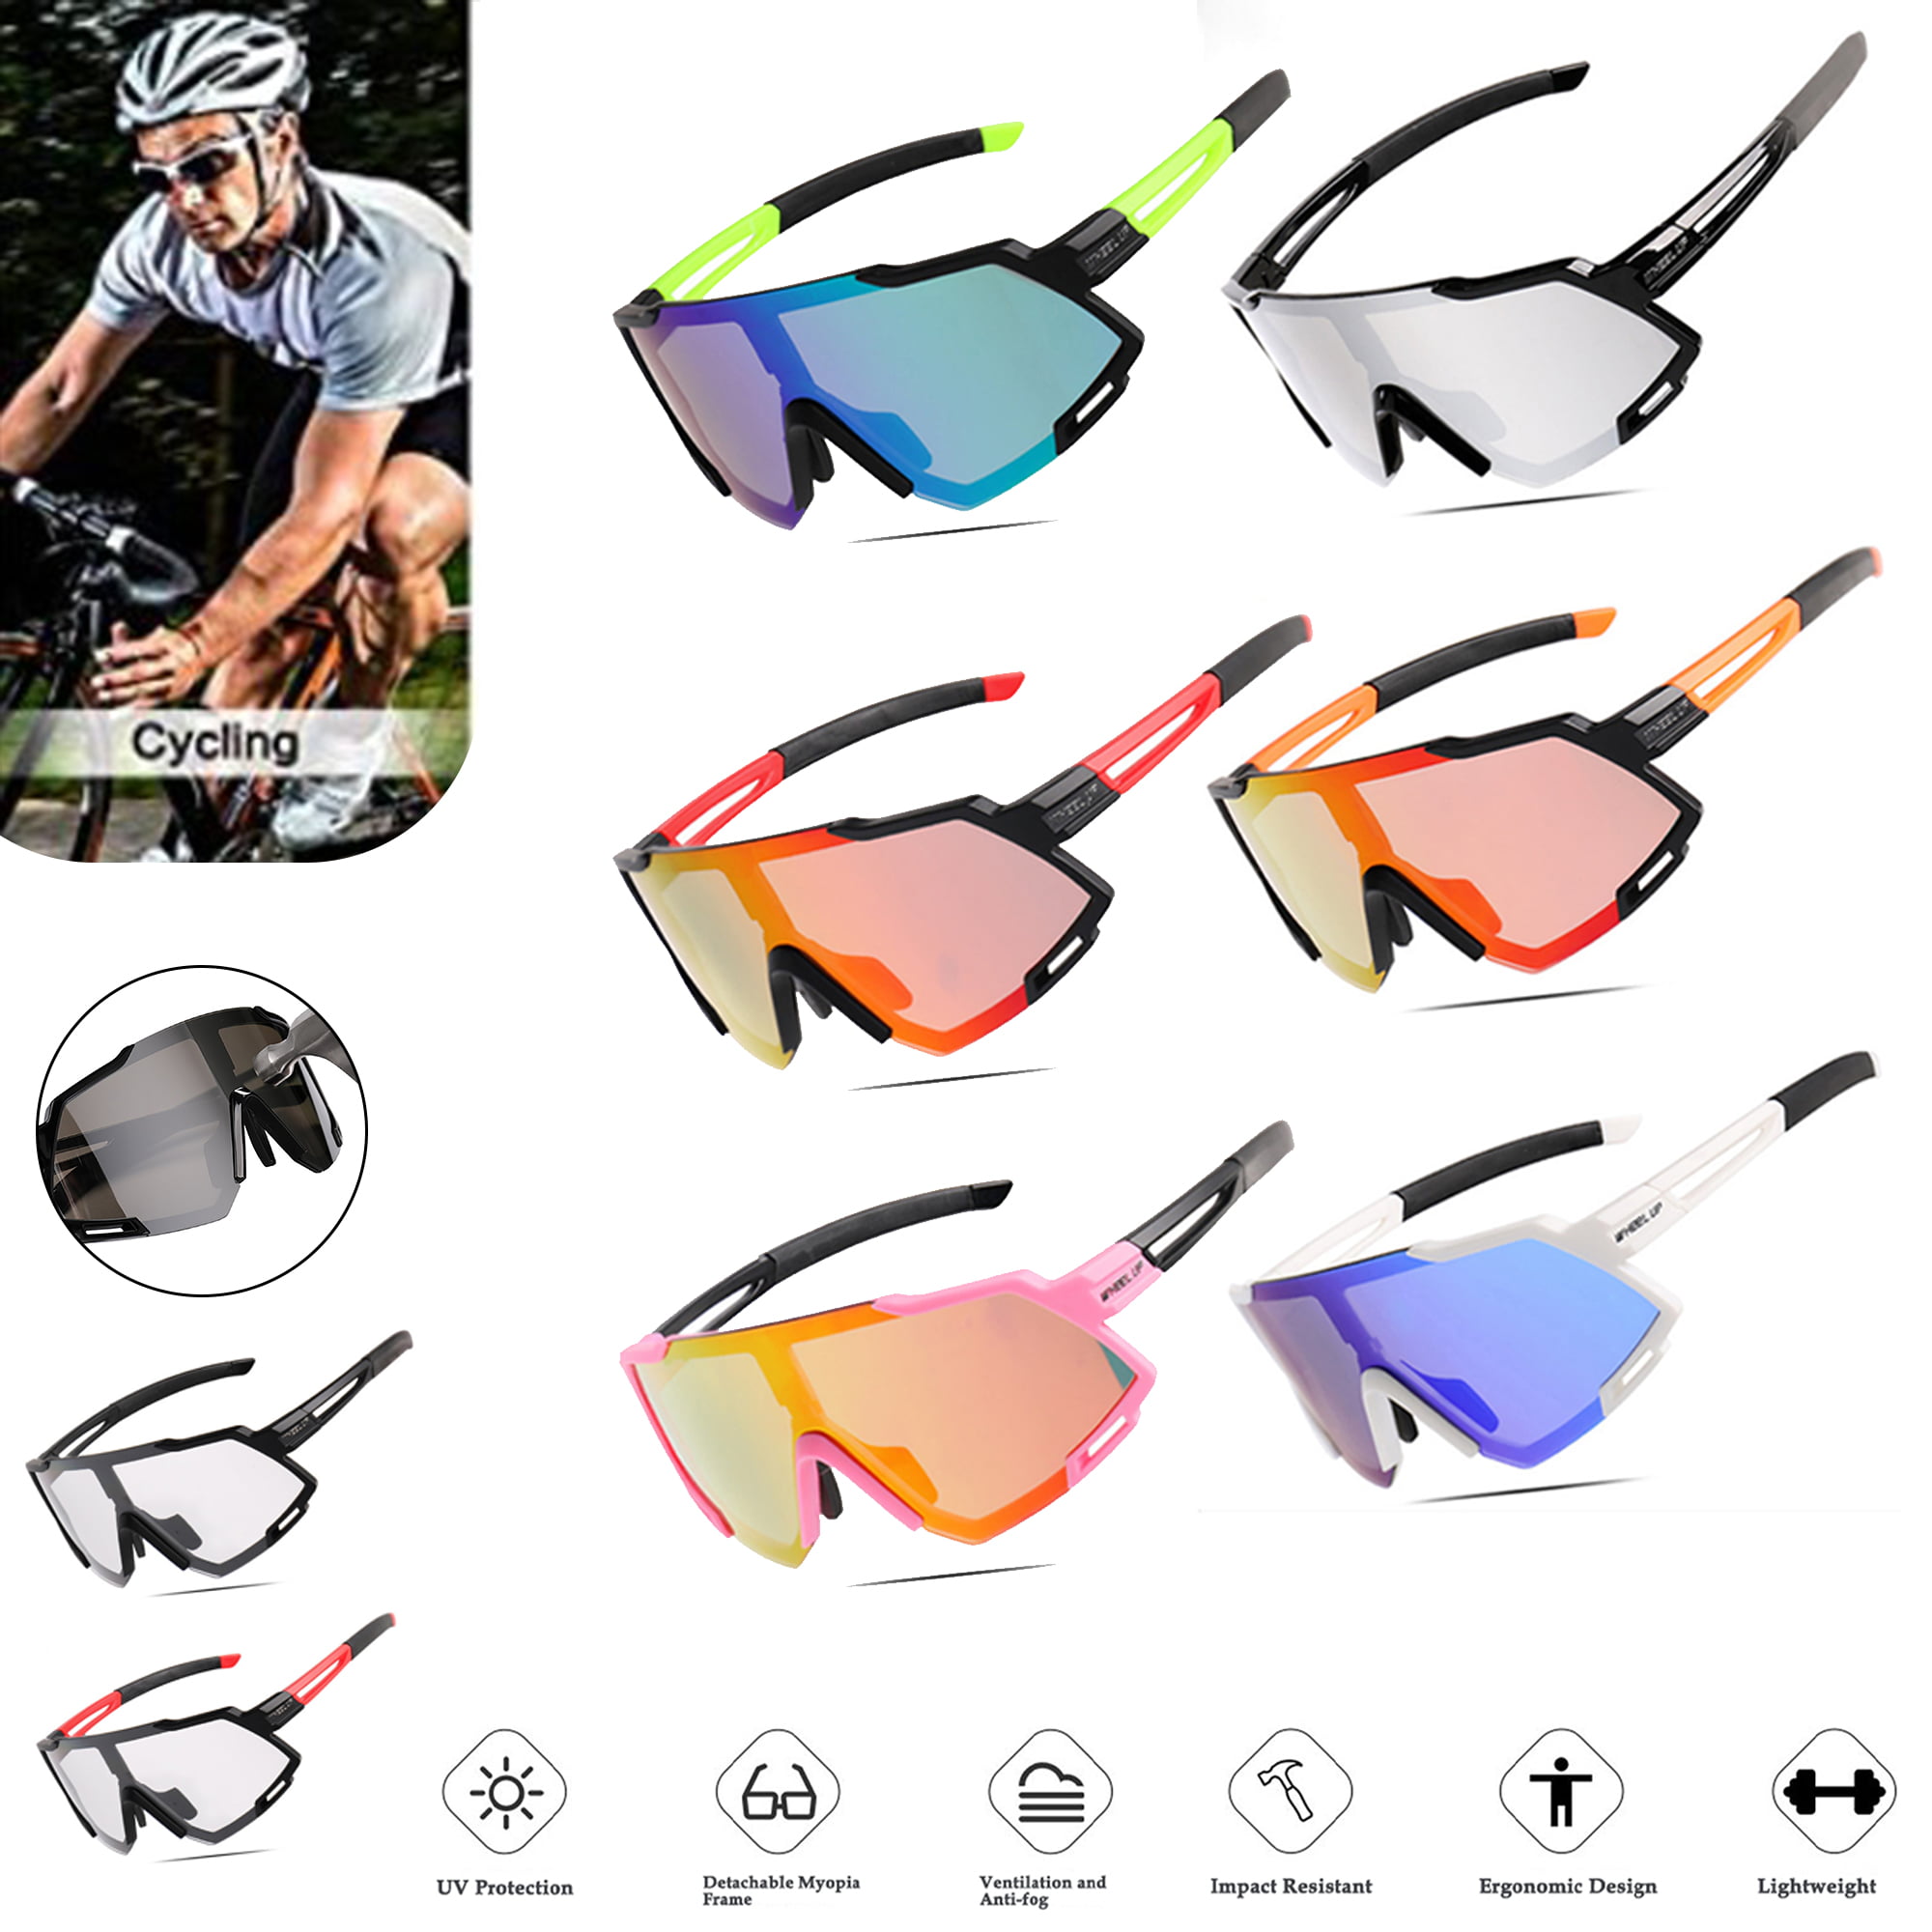 ROCKBROS Polarized Sunglasses for Men Women Cycling Glasses Sports Driving Bike Fishing Running Sunglasses TAC UV400 Protection 